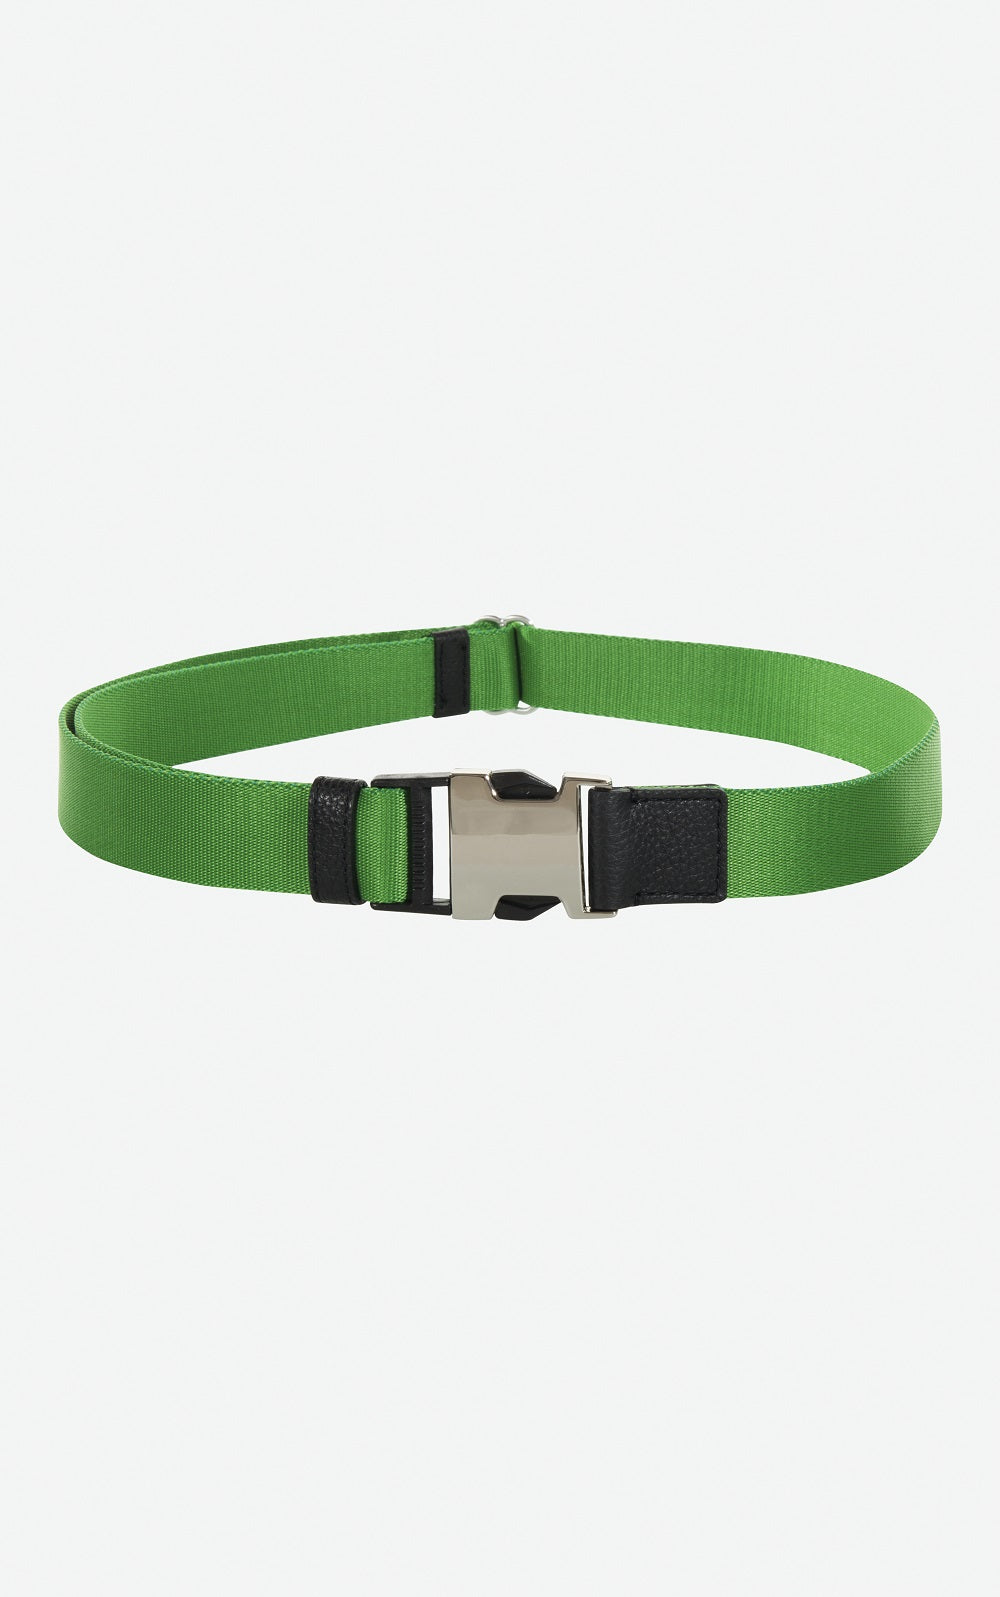 Palmarola Belt in green nylon tape